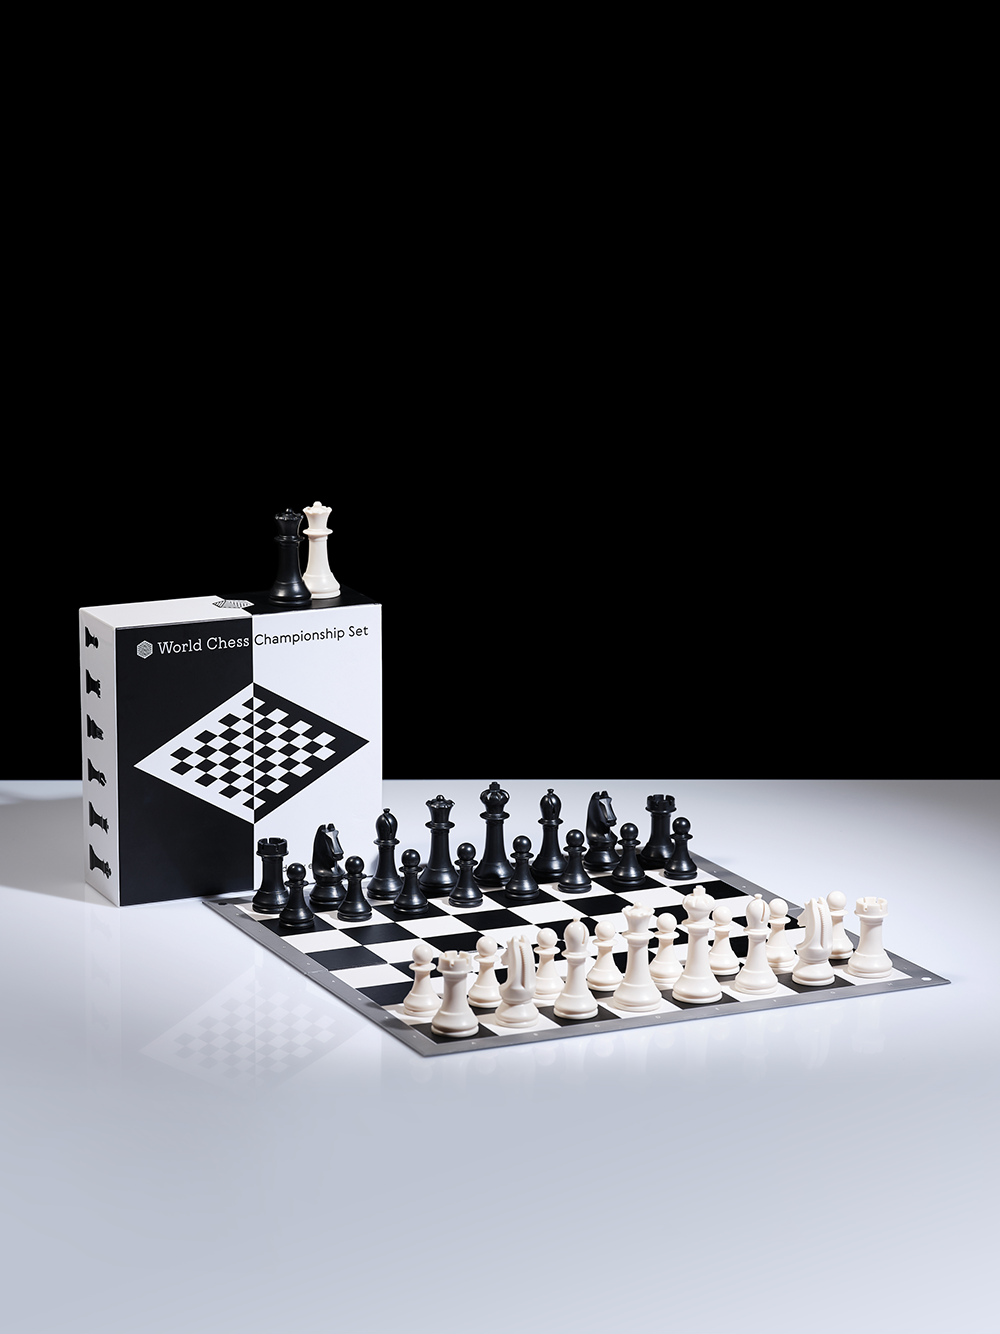 Premium Vector  Blue chess board with white border